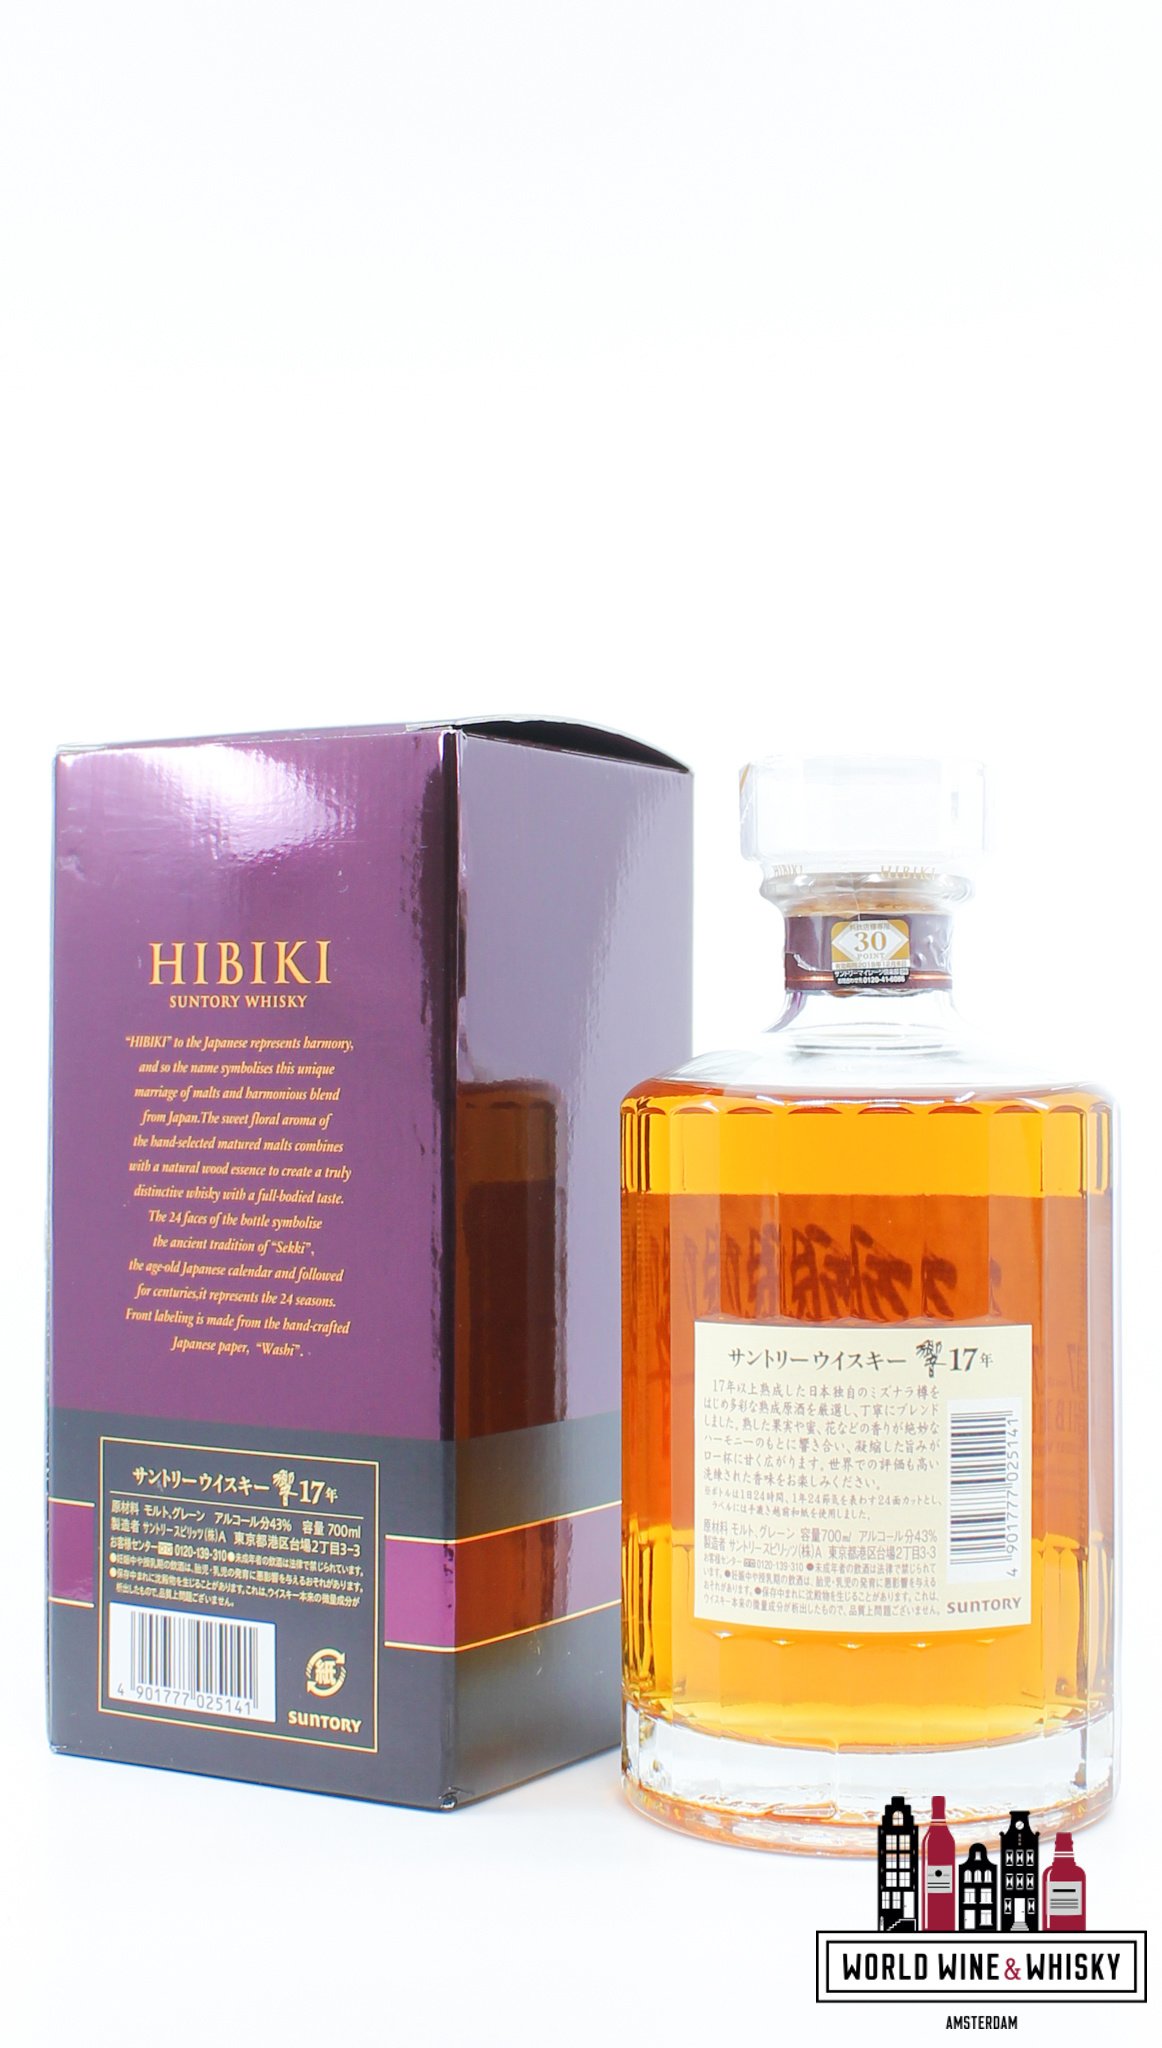 Hibiki Hibiki 17 Years Old - Suntory Whisky 43% (in the purple box)